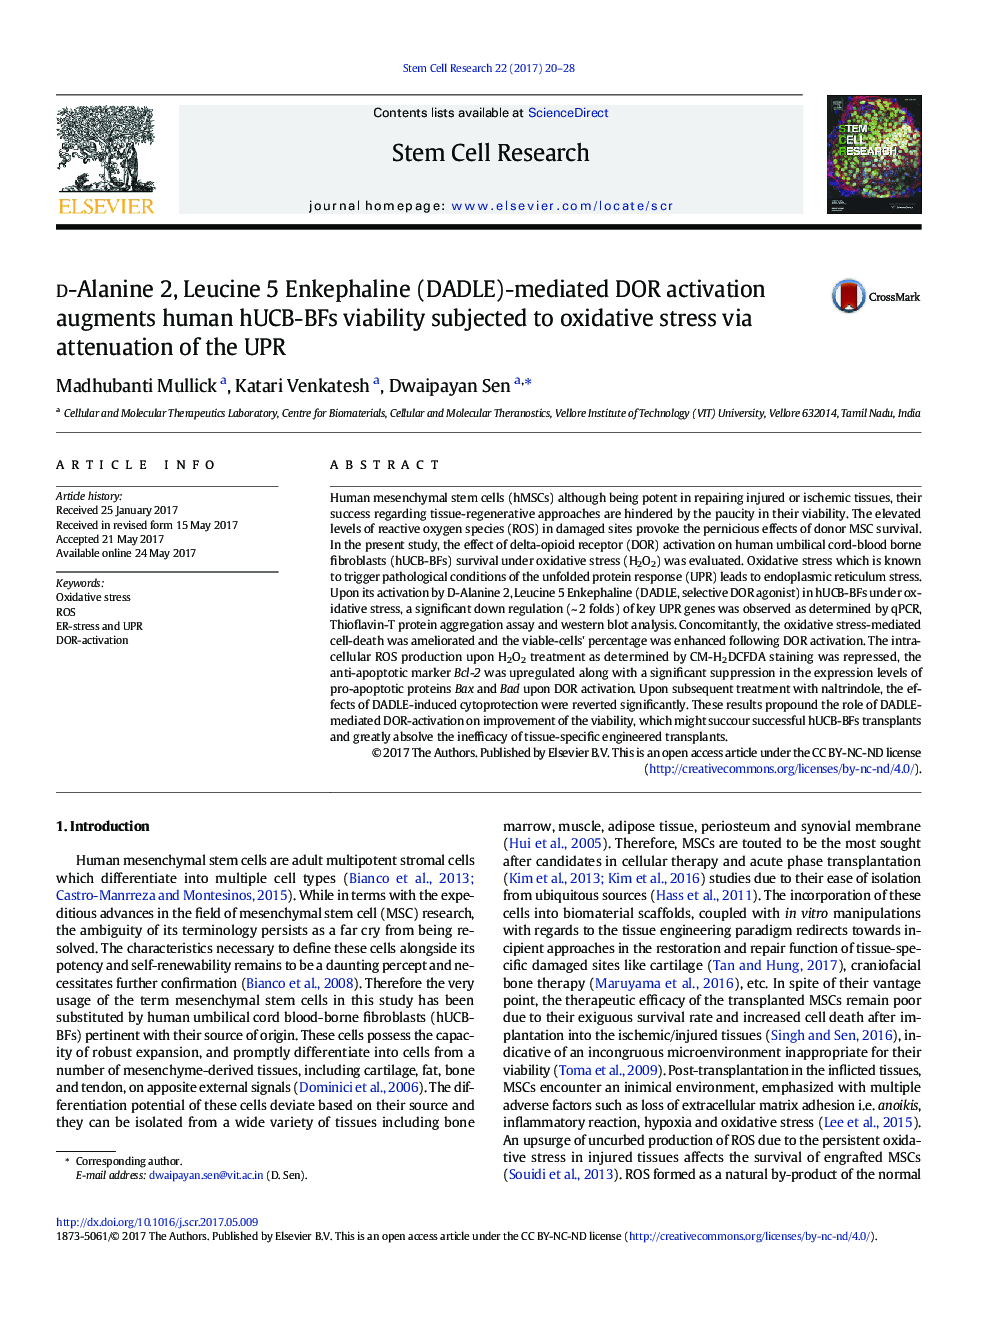 d-Alanine 2, Leucine 5 Enkephaline (DADLE)-mediated DOR activation augments human hUCB-BFs viability subjected to oxidative stress via attenuation of the UPR